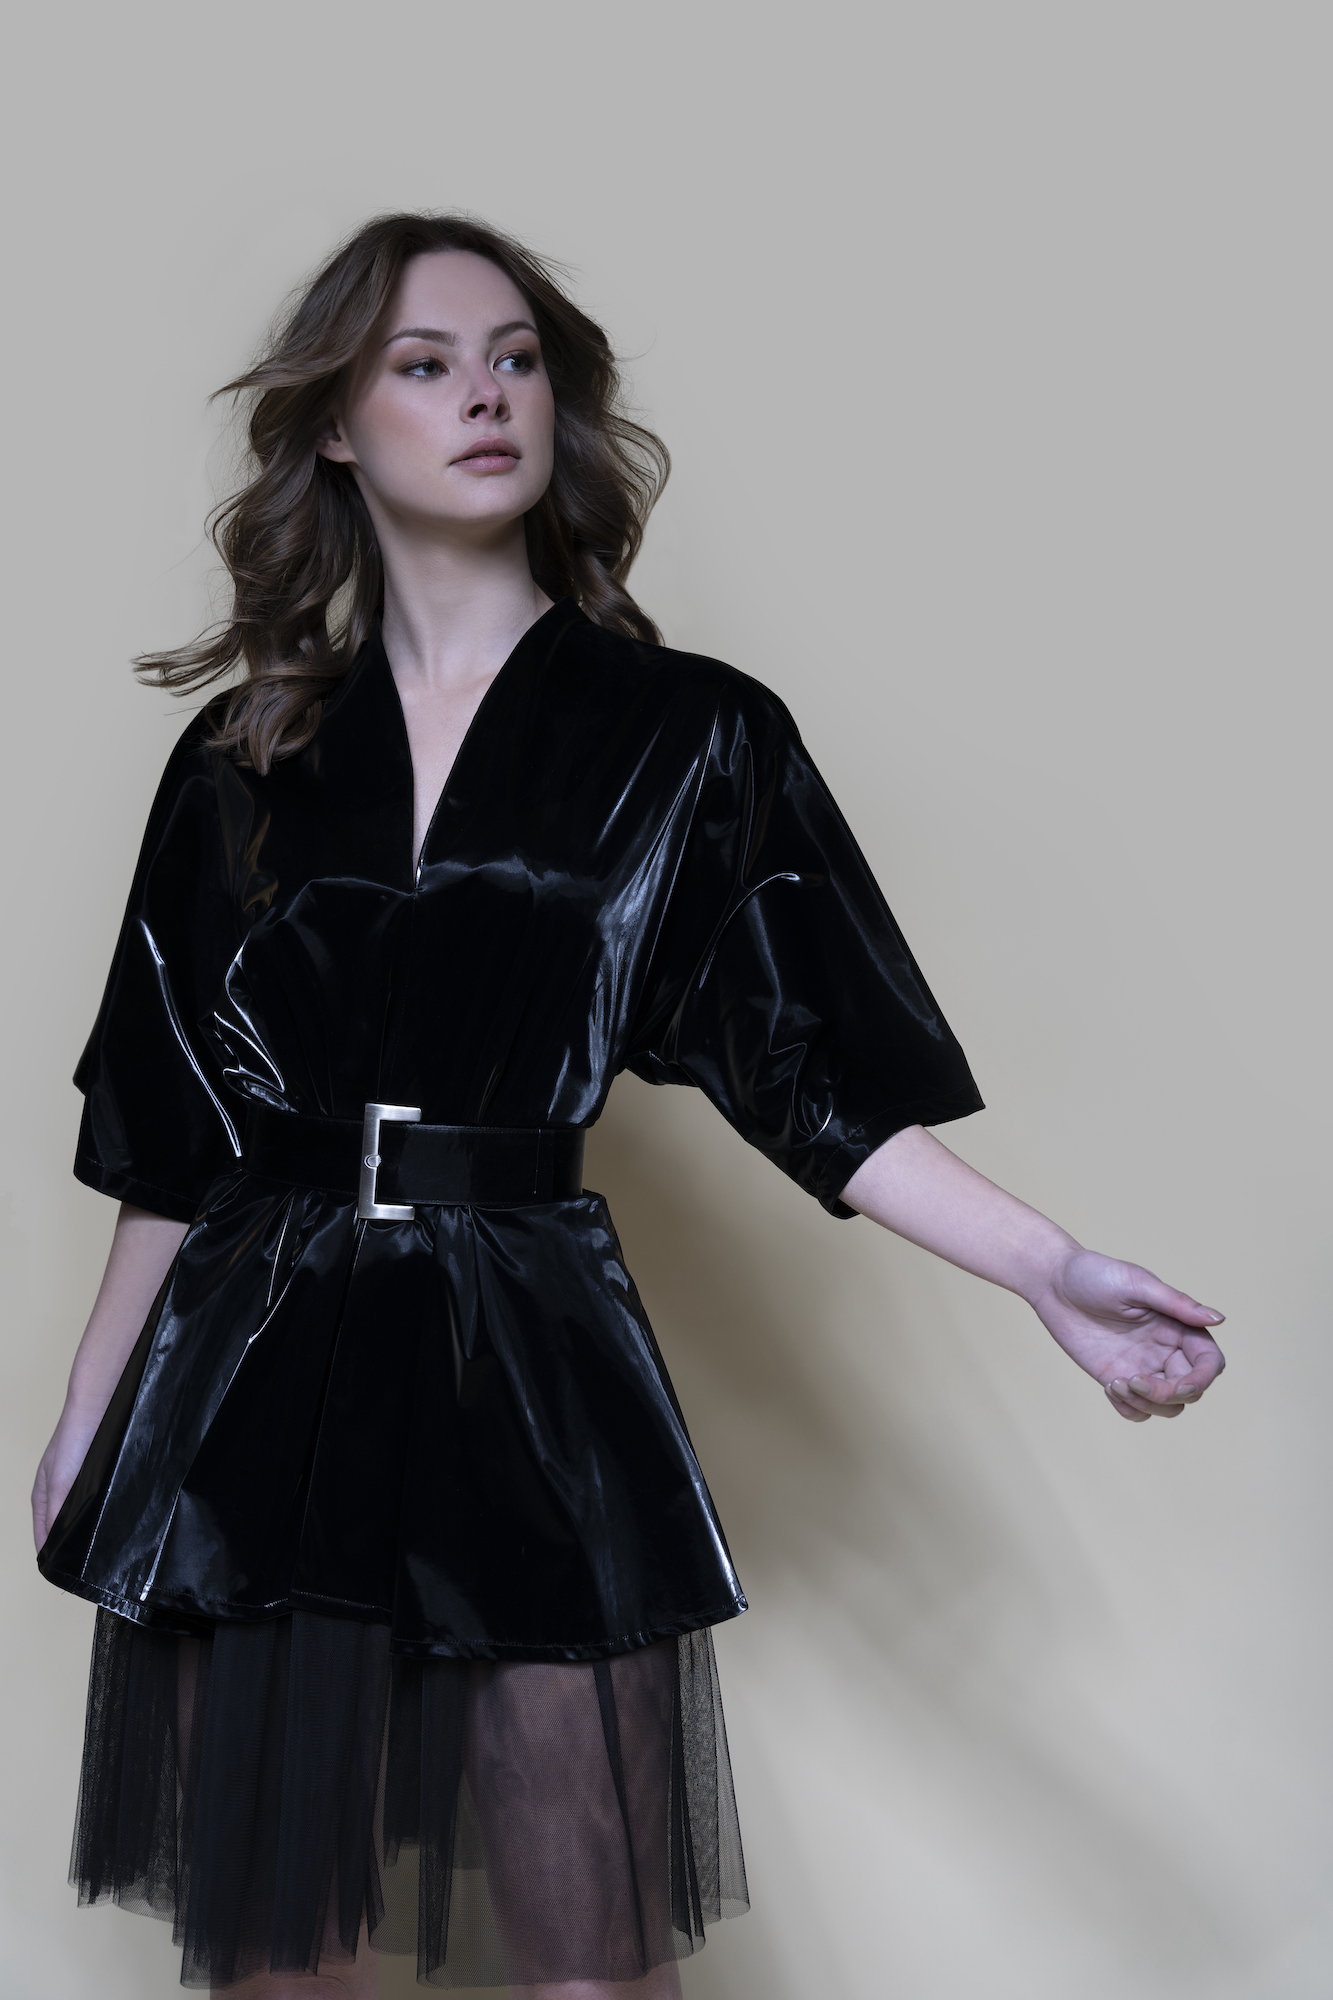 Latex jurk zwart | Exclusieve jurk latex